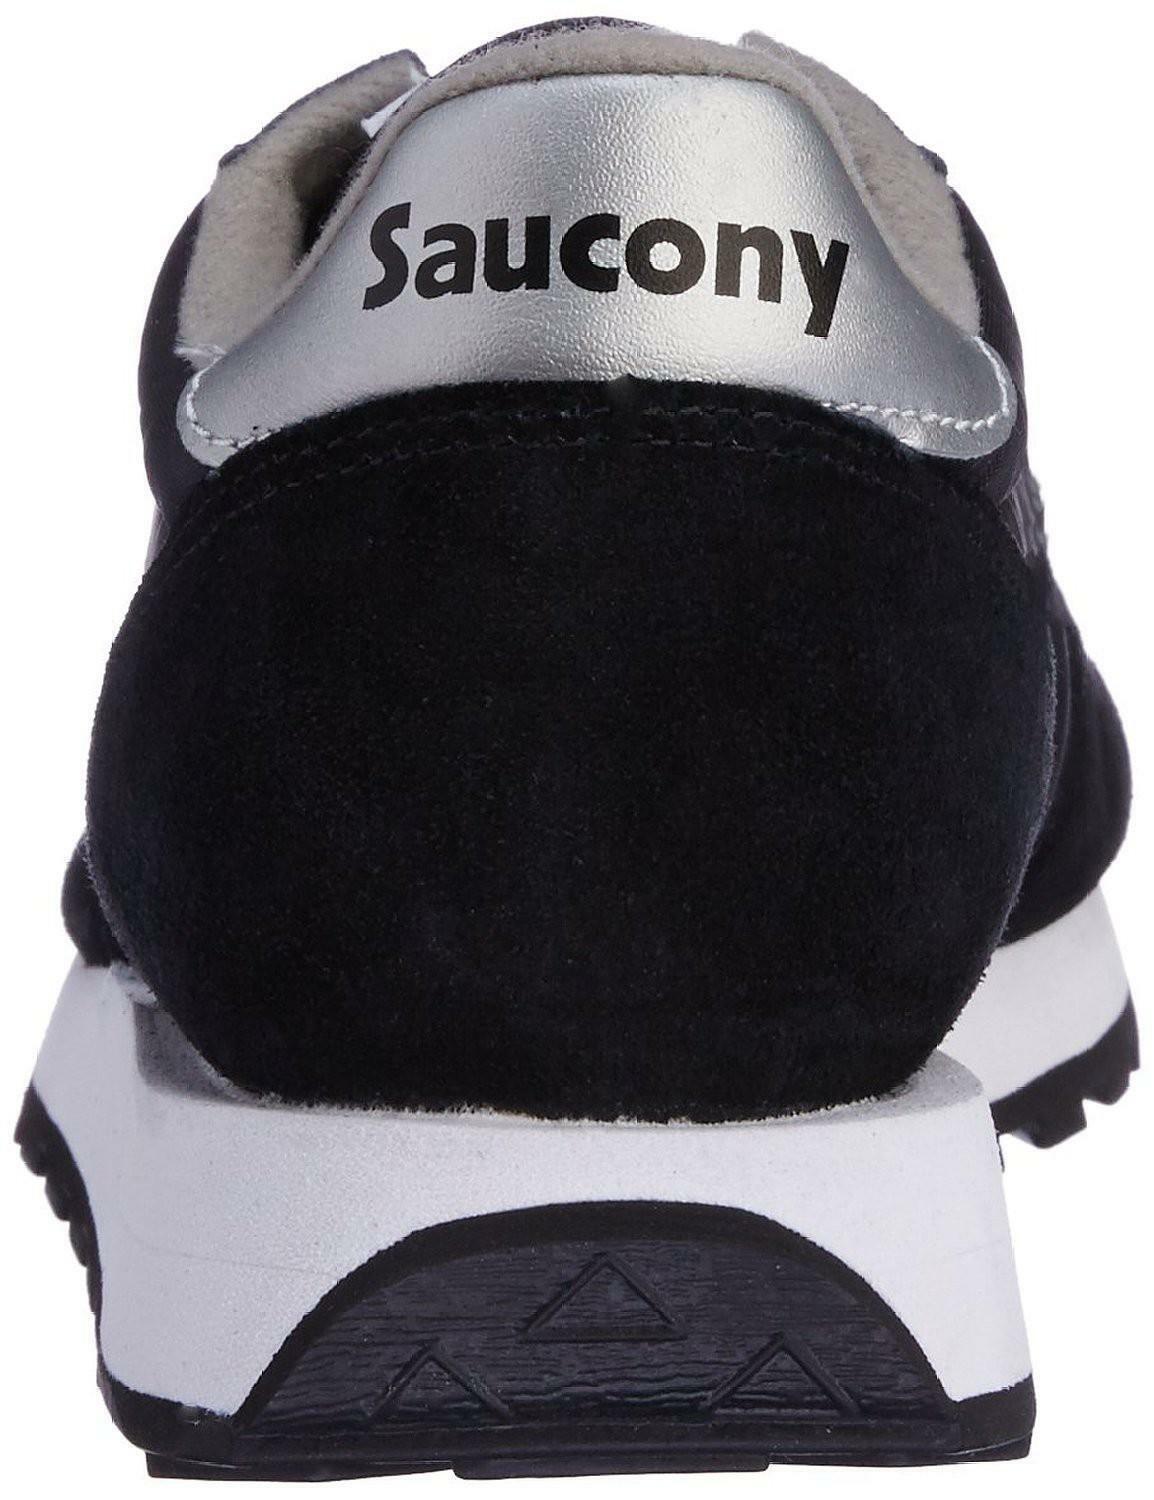 saucony saucony jazz original  scarpe sportive nere argento